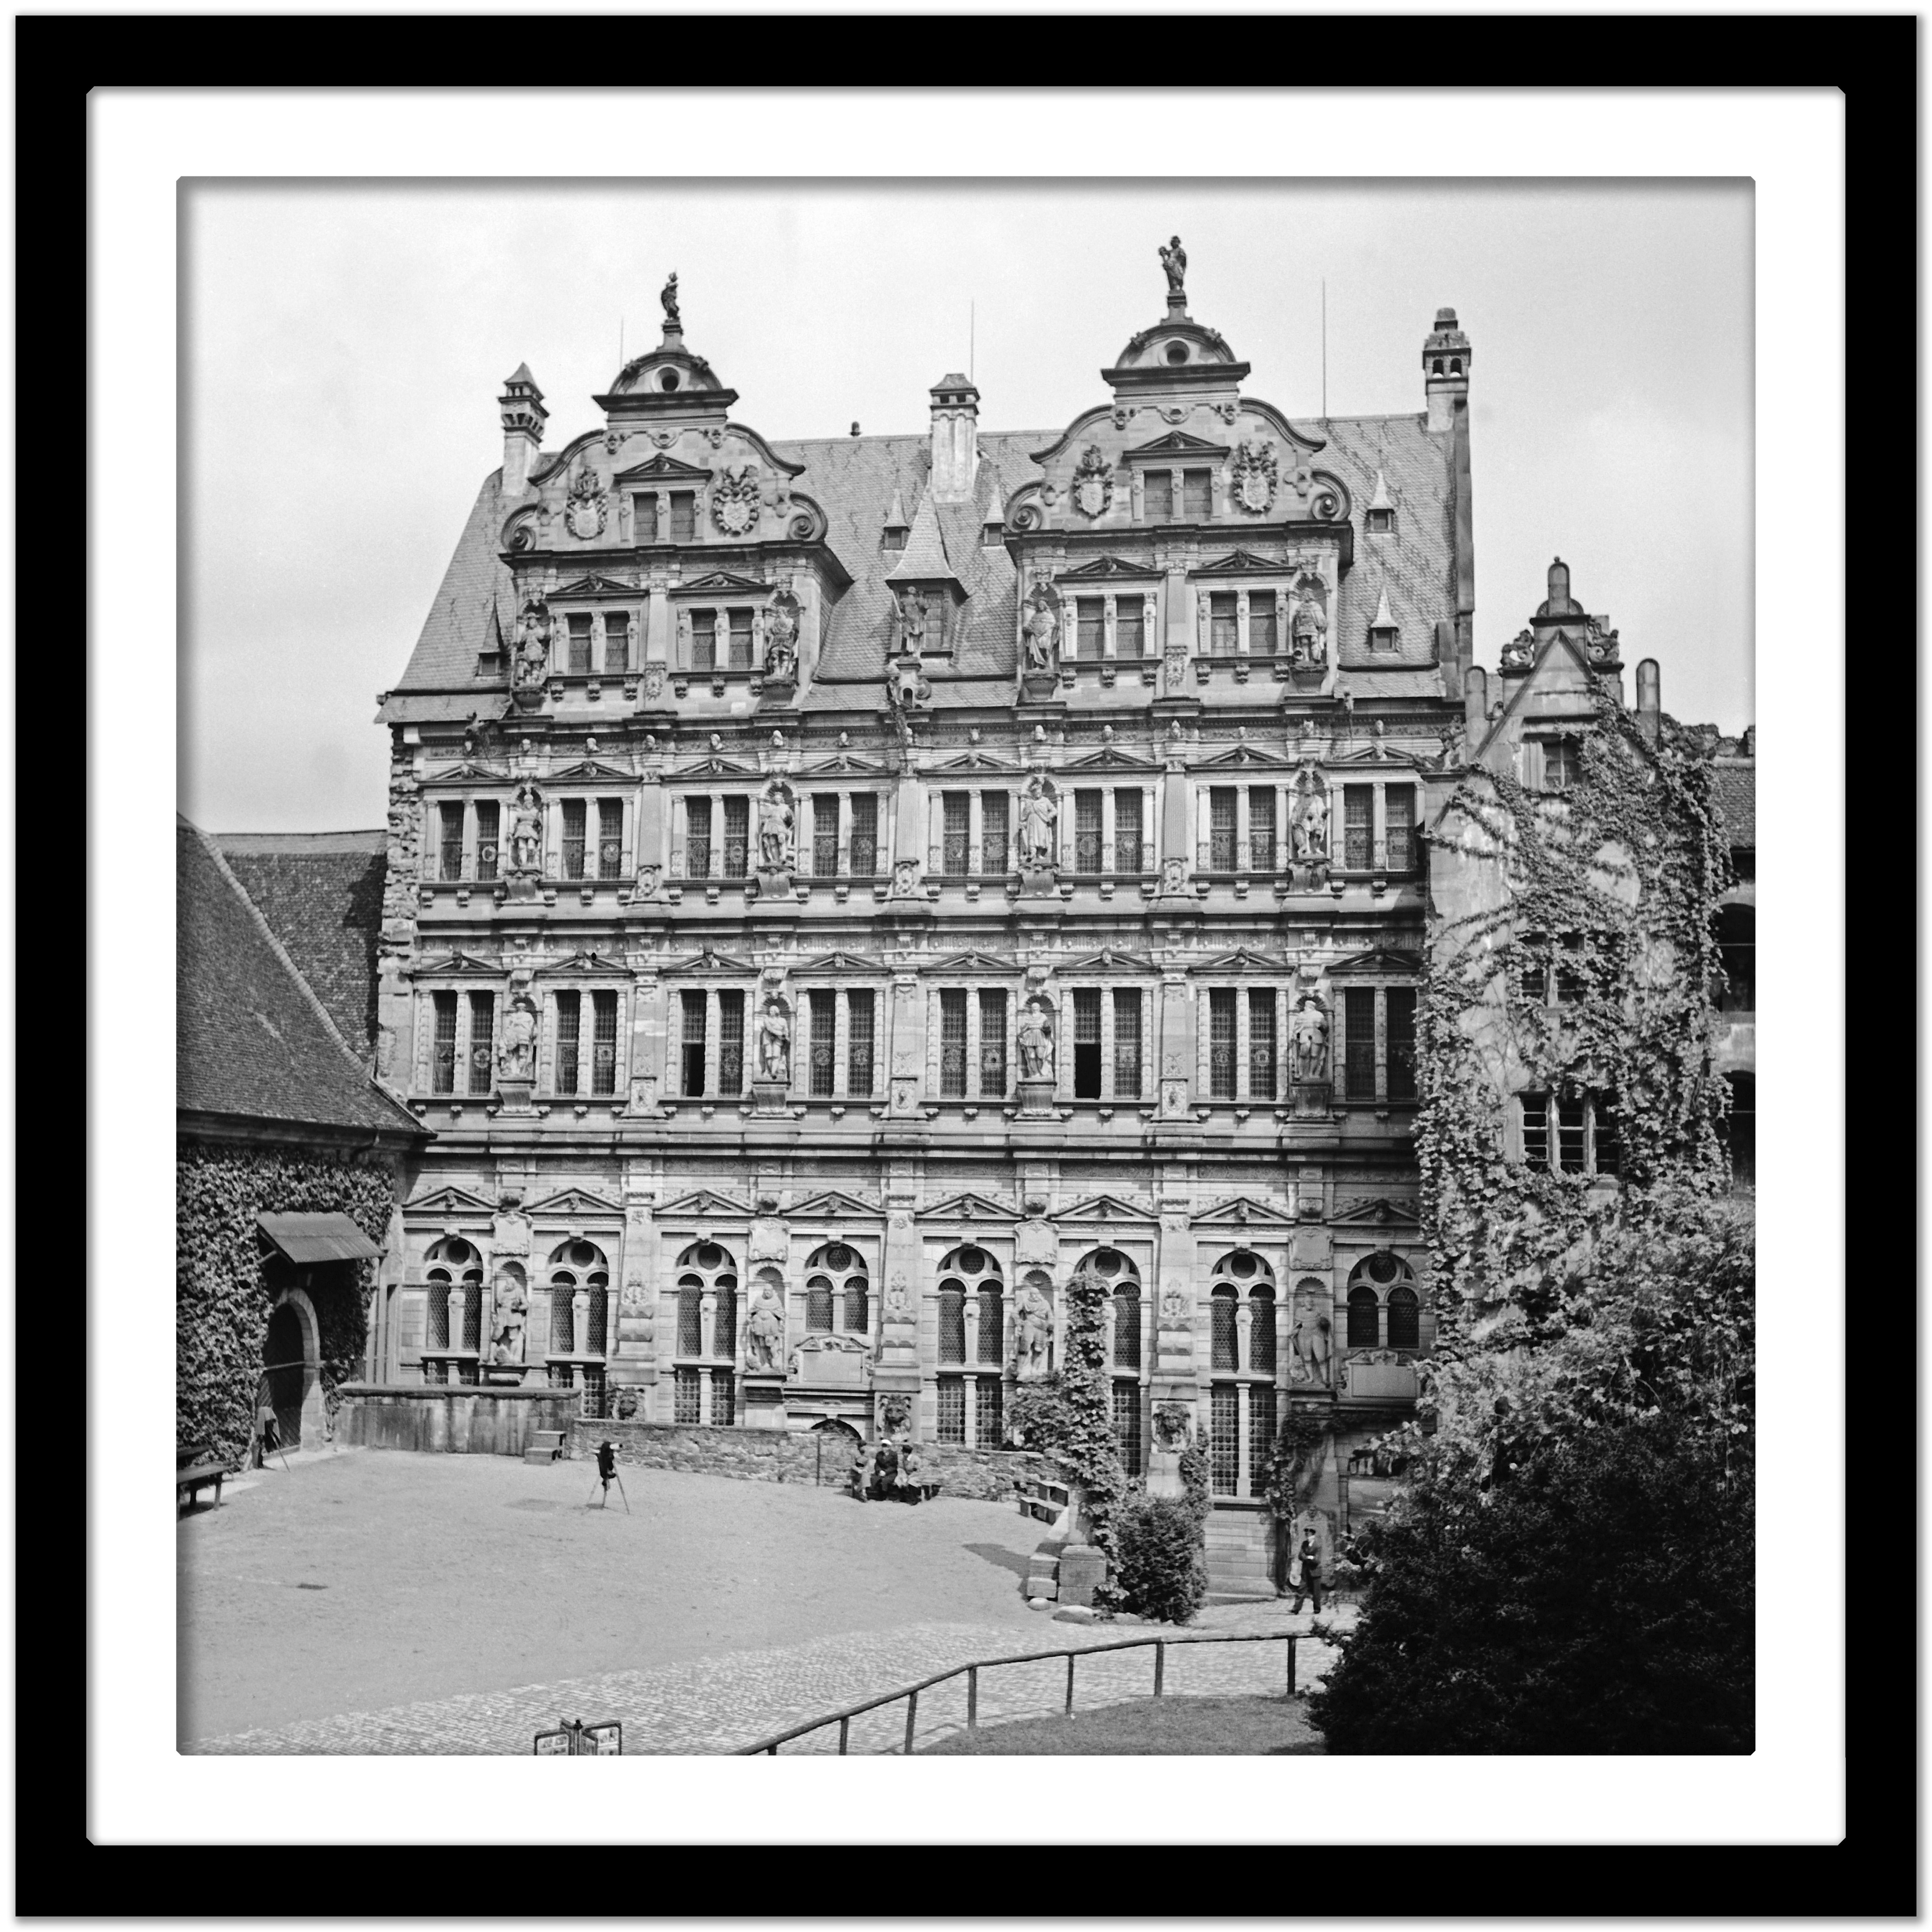 Friedrichsbau building at Castle, Heidelberg Germany 1938, Printed Later - Modern Photograph by Karl Heinrich Lämmel